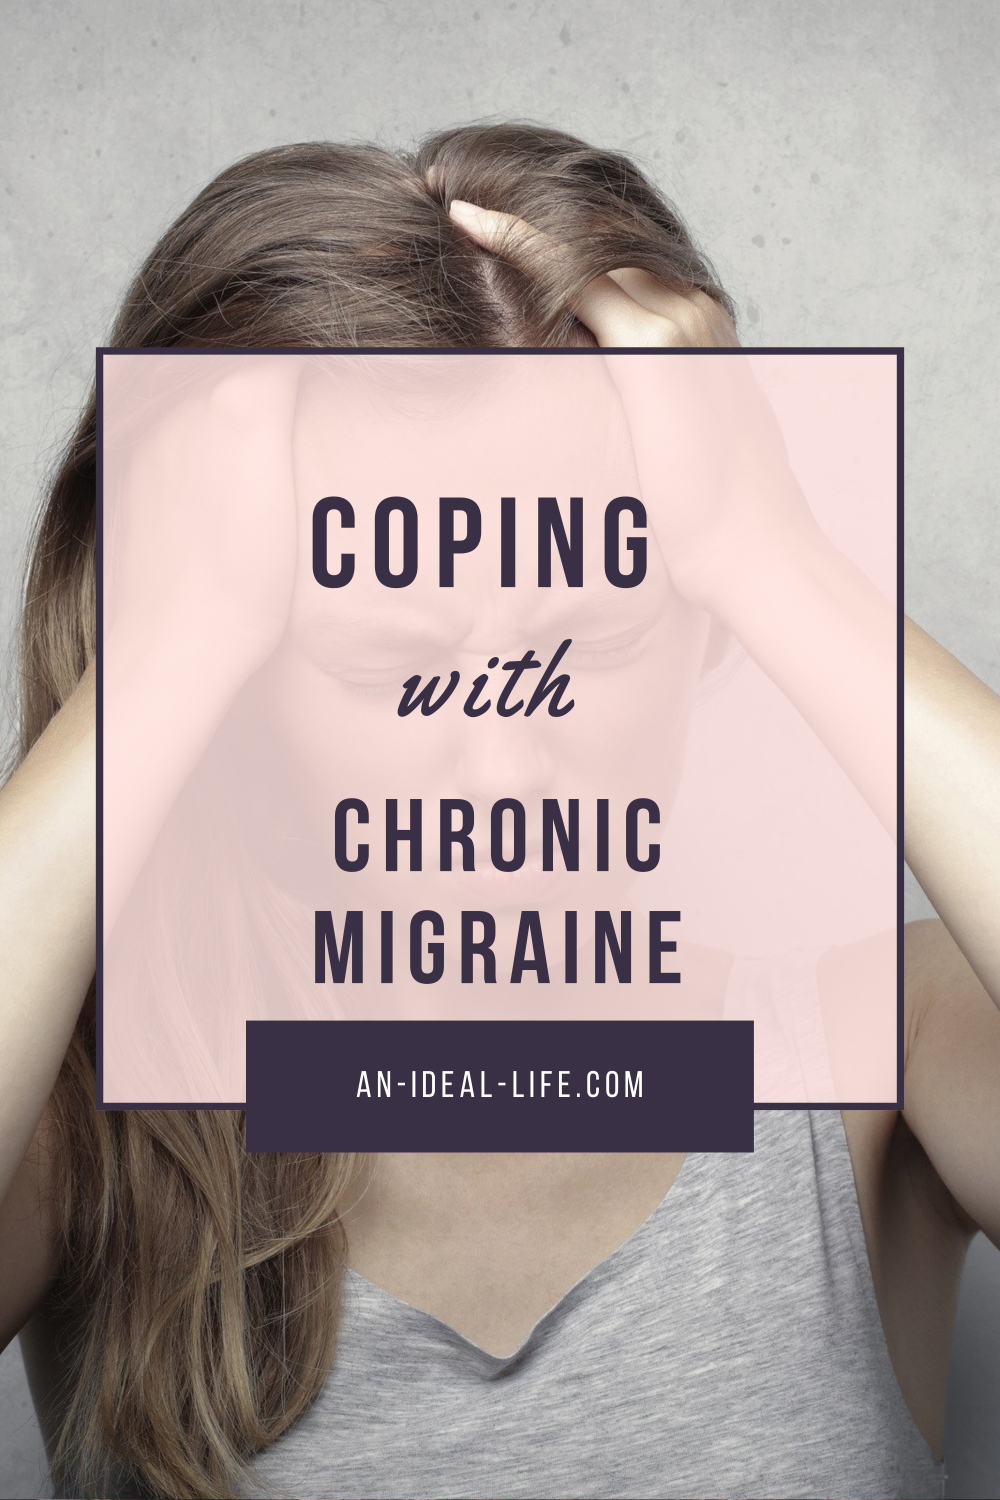 Coping with Chronic Migraine